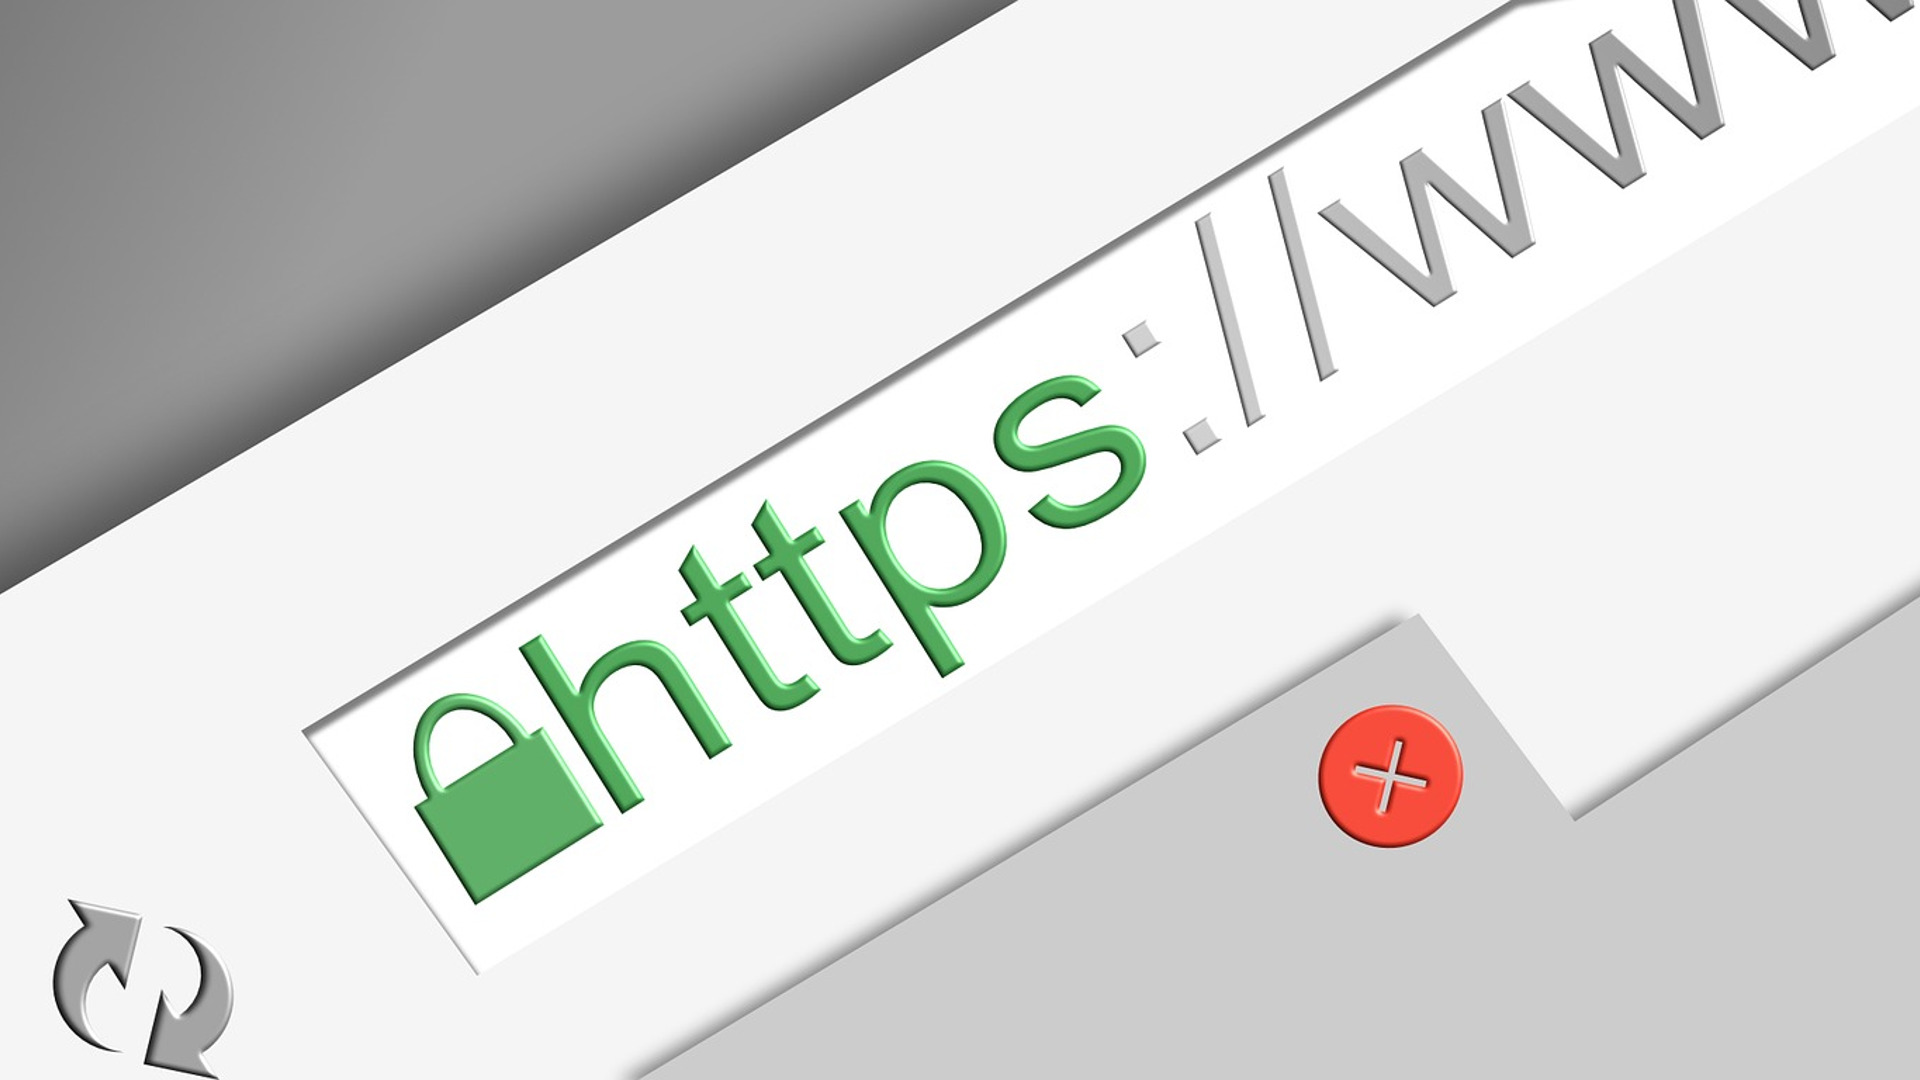 Chrome warnt künftig vor ungeschützten HTTP-Verbindungen